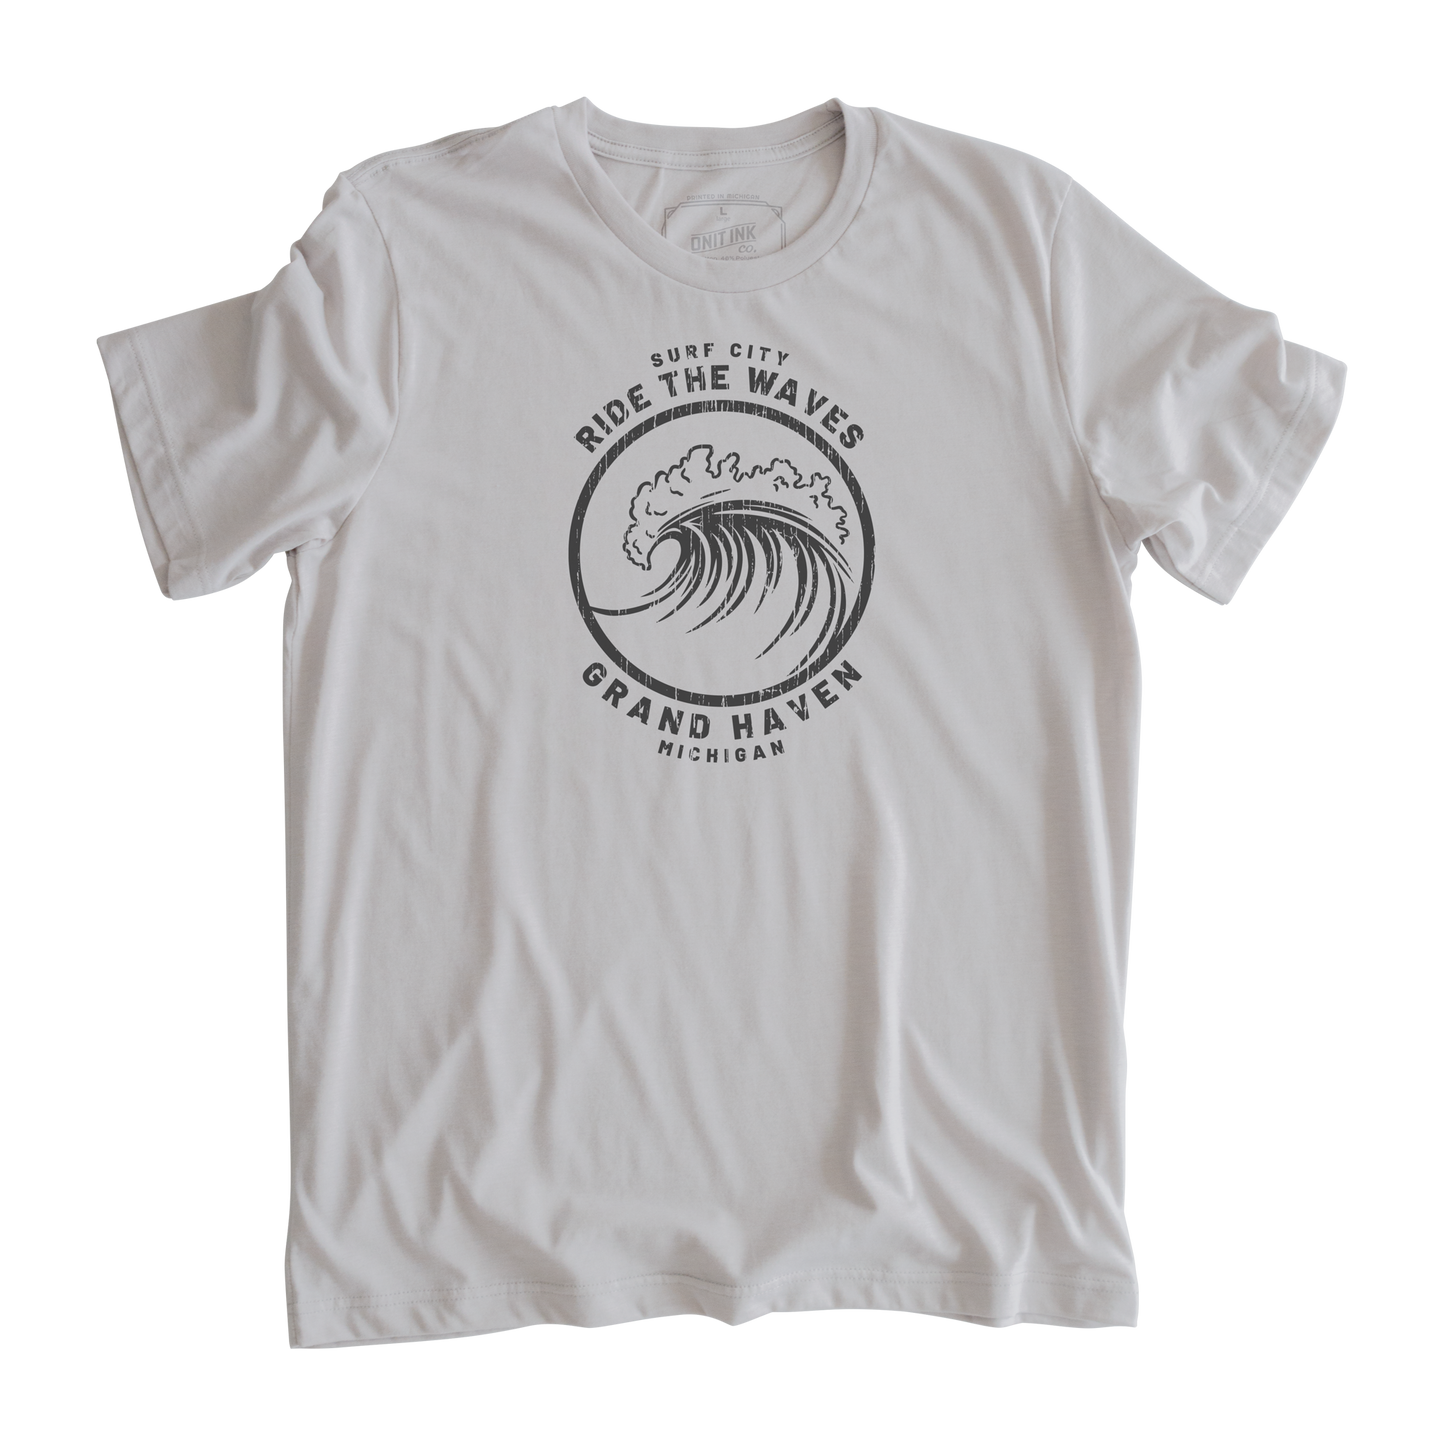 Grand Haven, Michigan Surf City T-Shirt